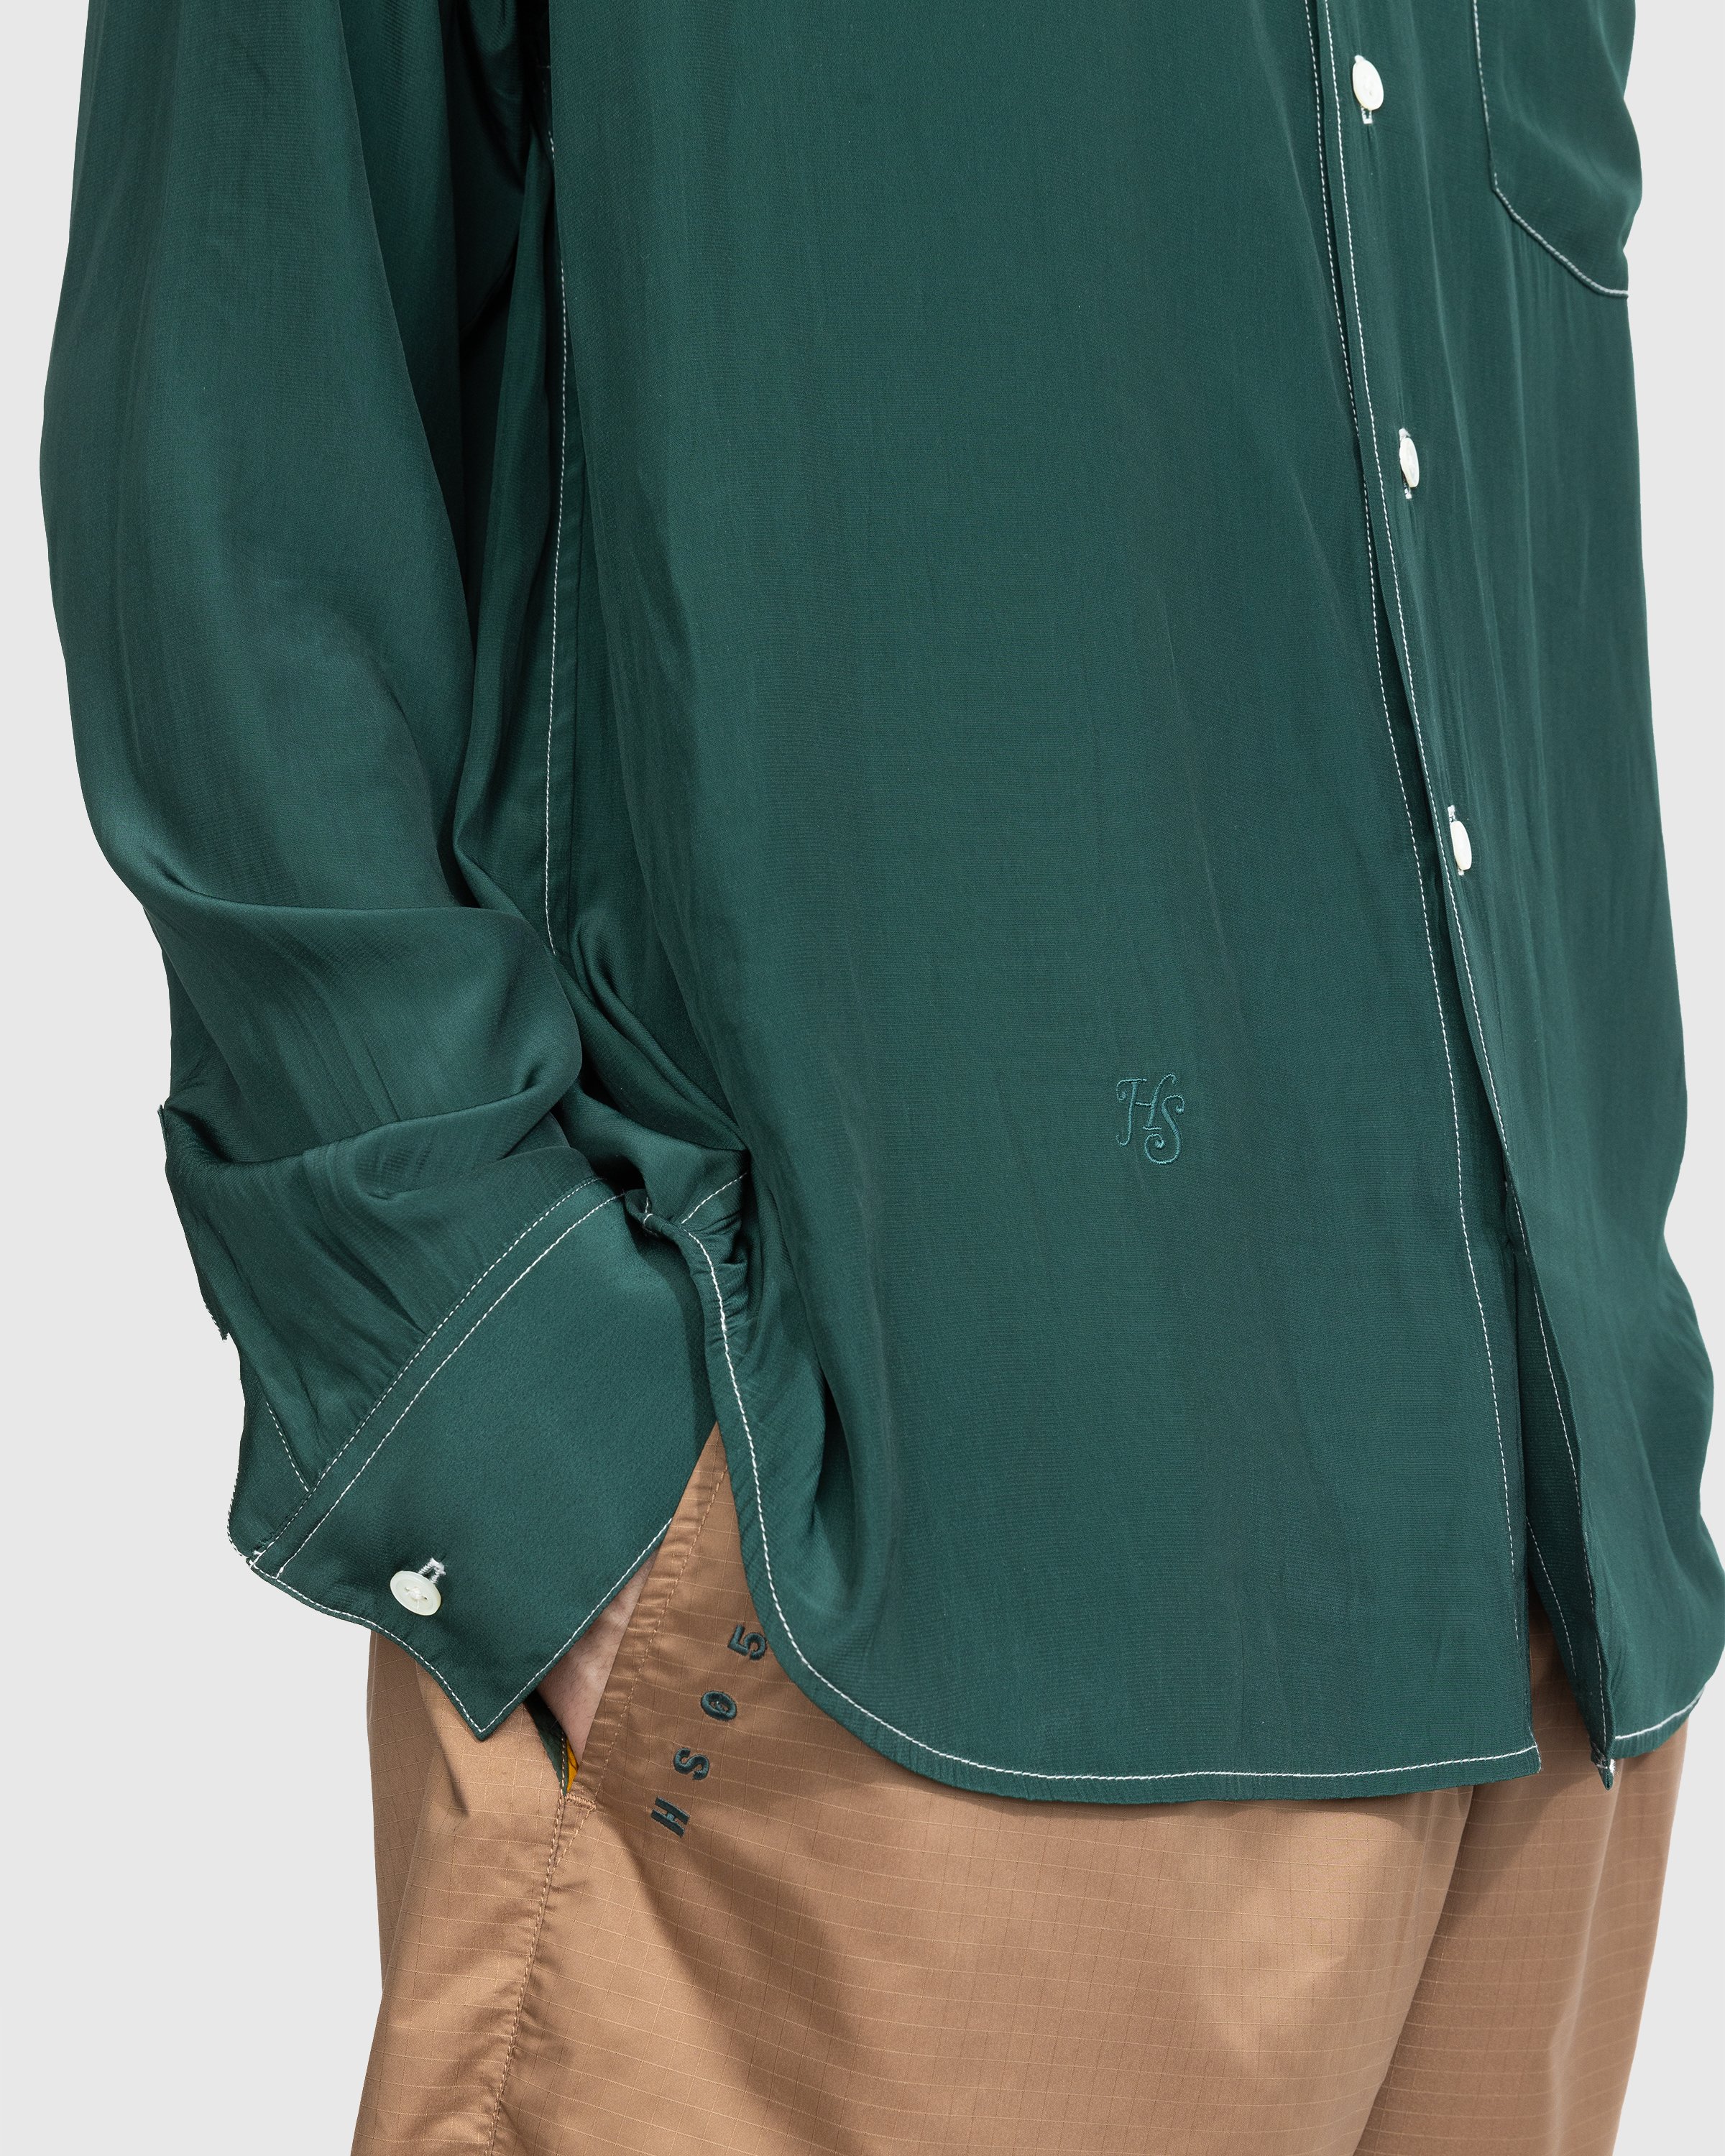 Highsnobiety - Lightweight Long-Sleeve Shirt Dark Green - Clothing - Green - Image 6